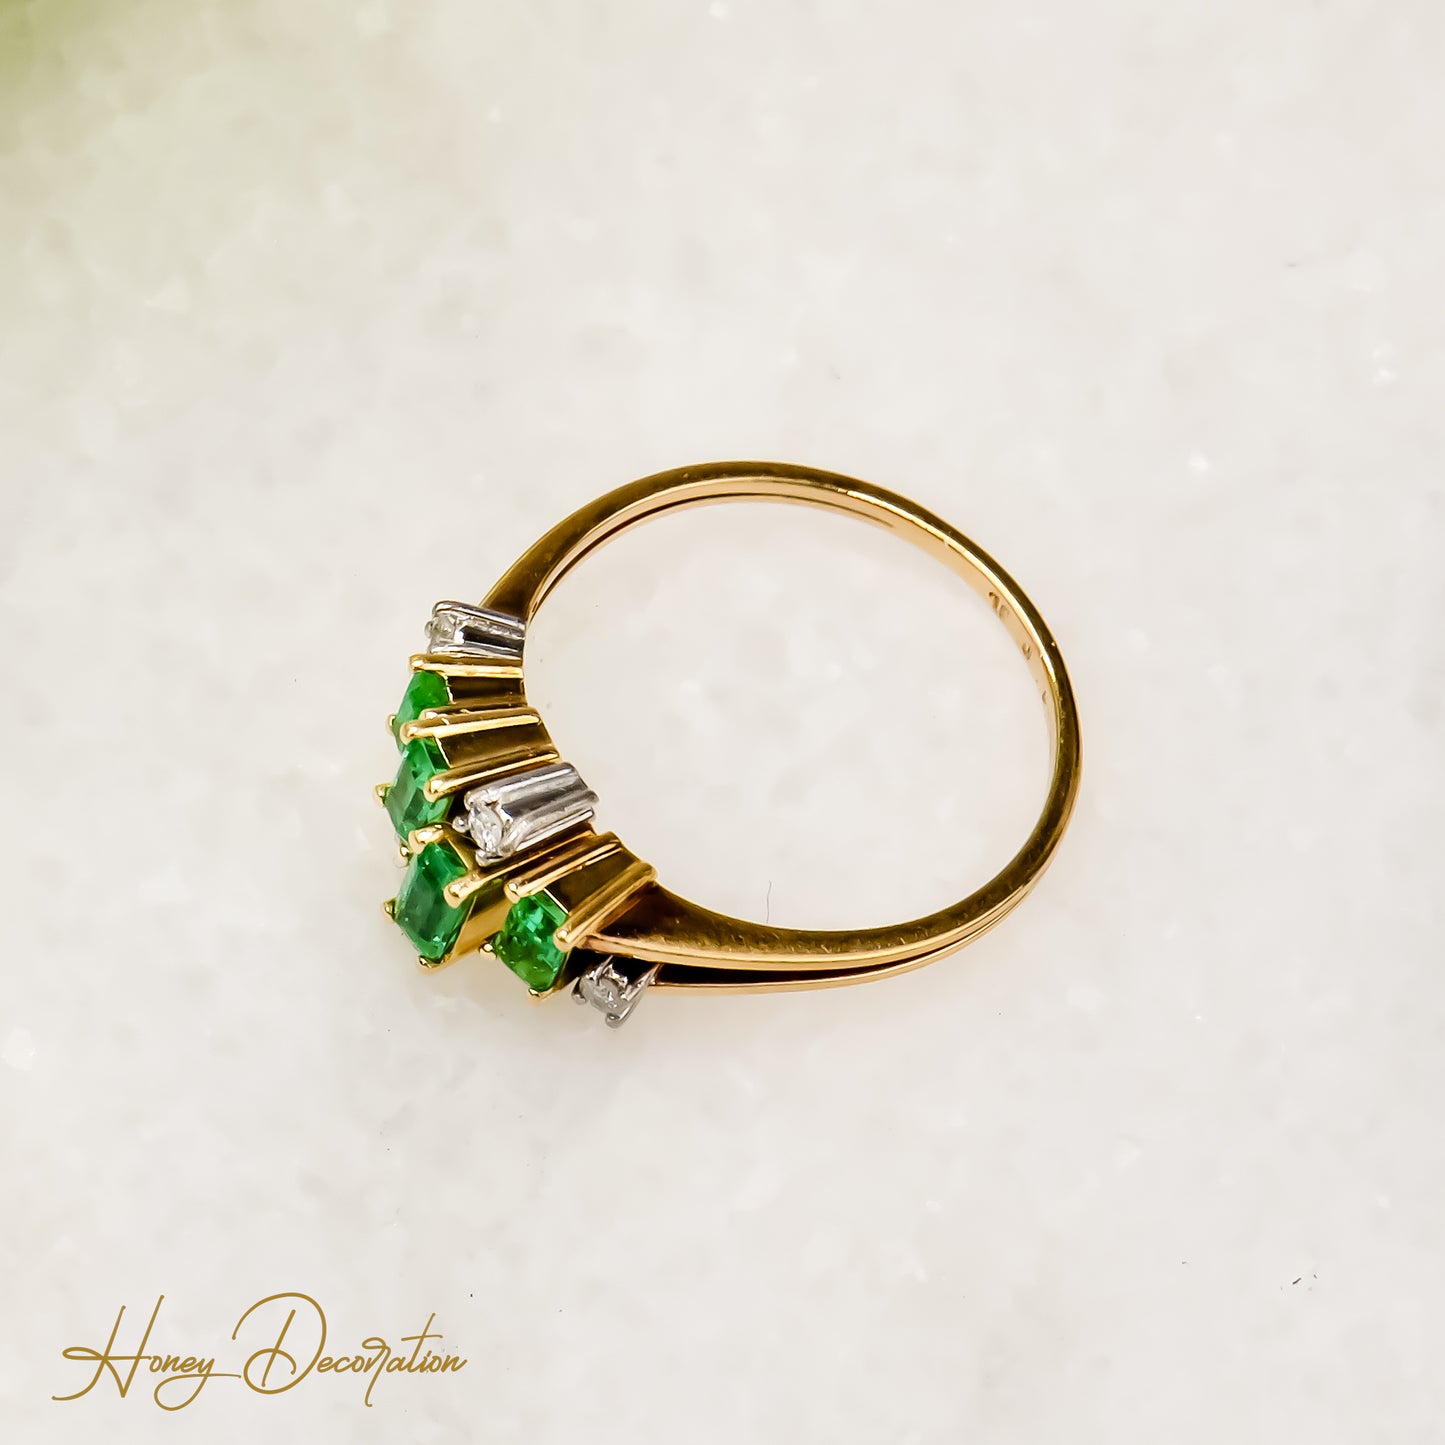 Enchanting emerald ring from 18 karat gold